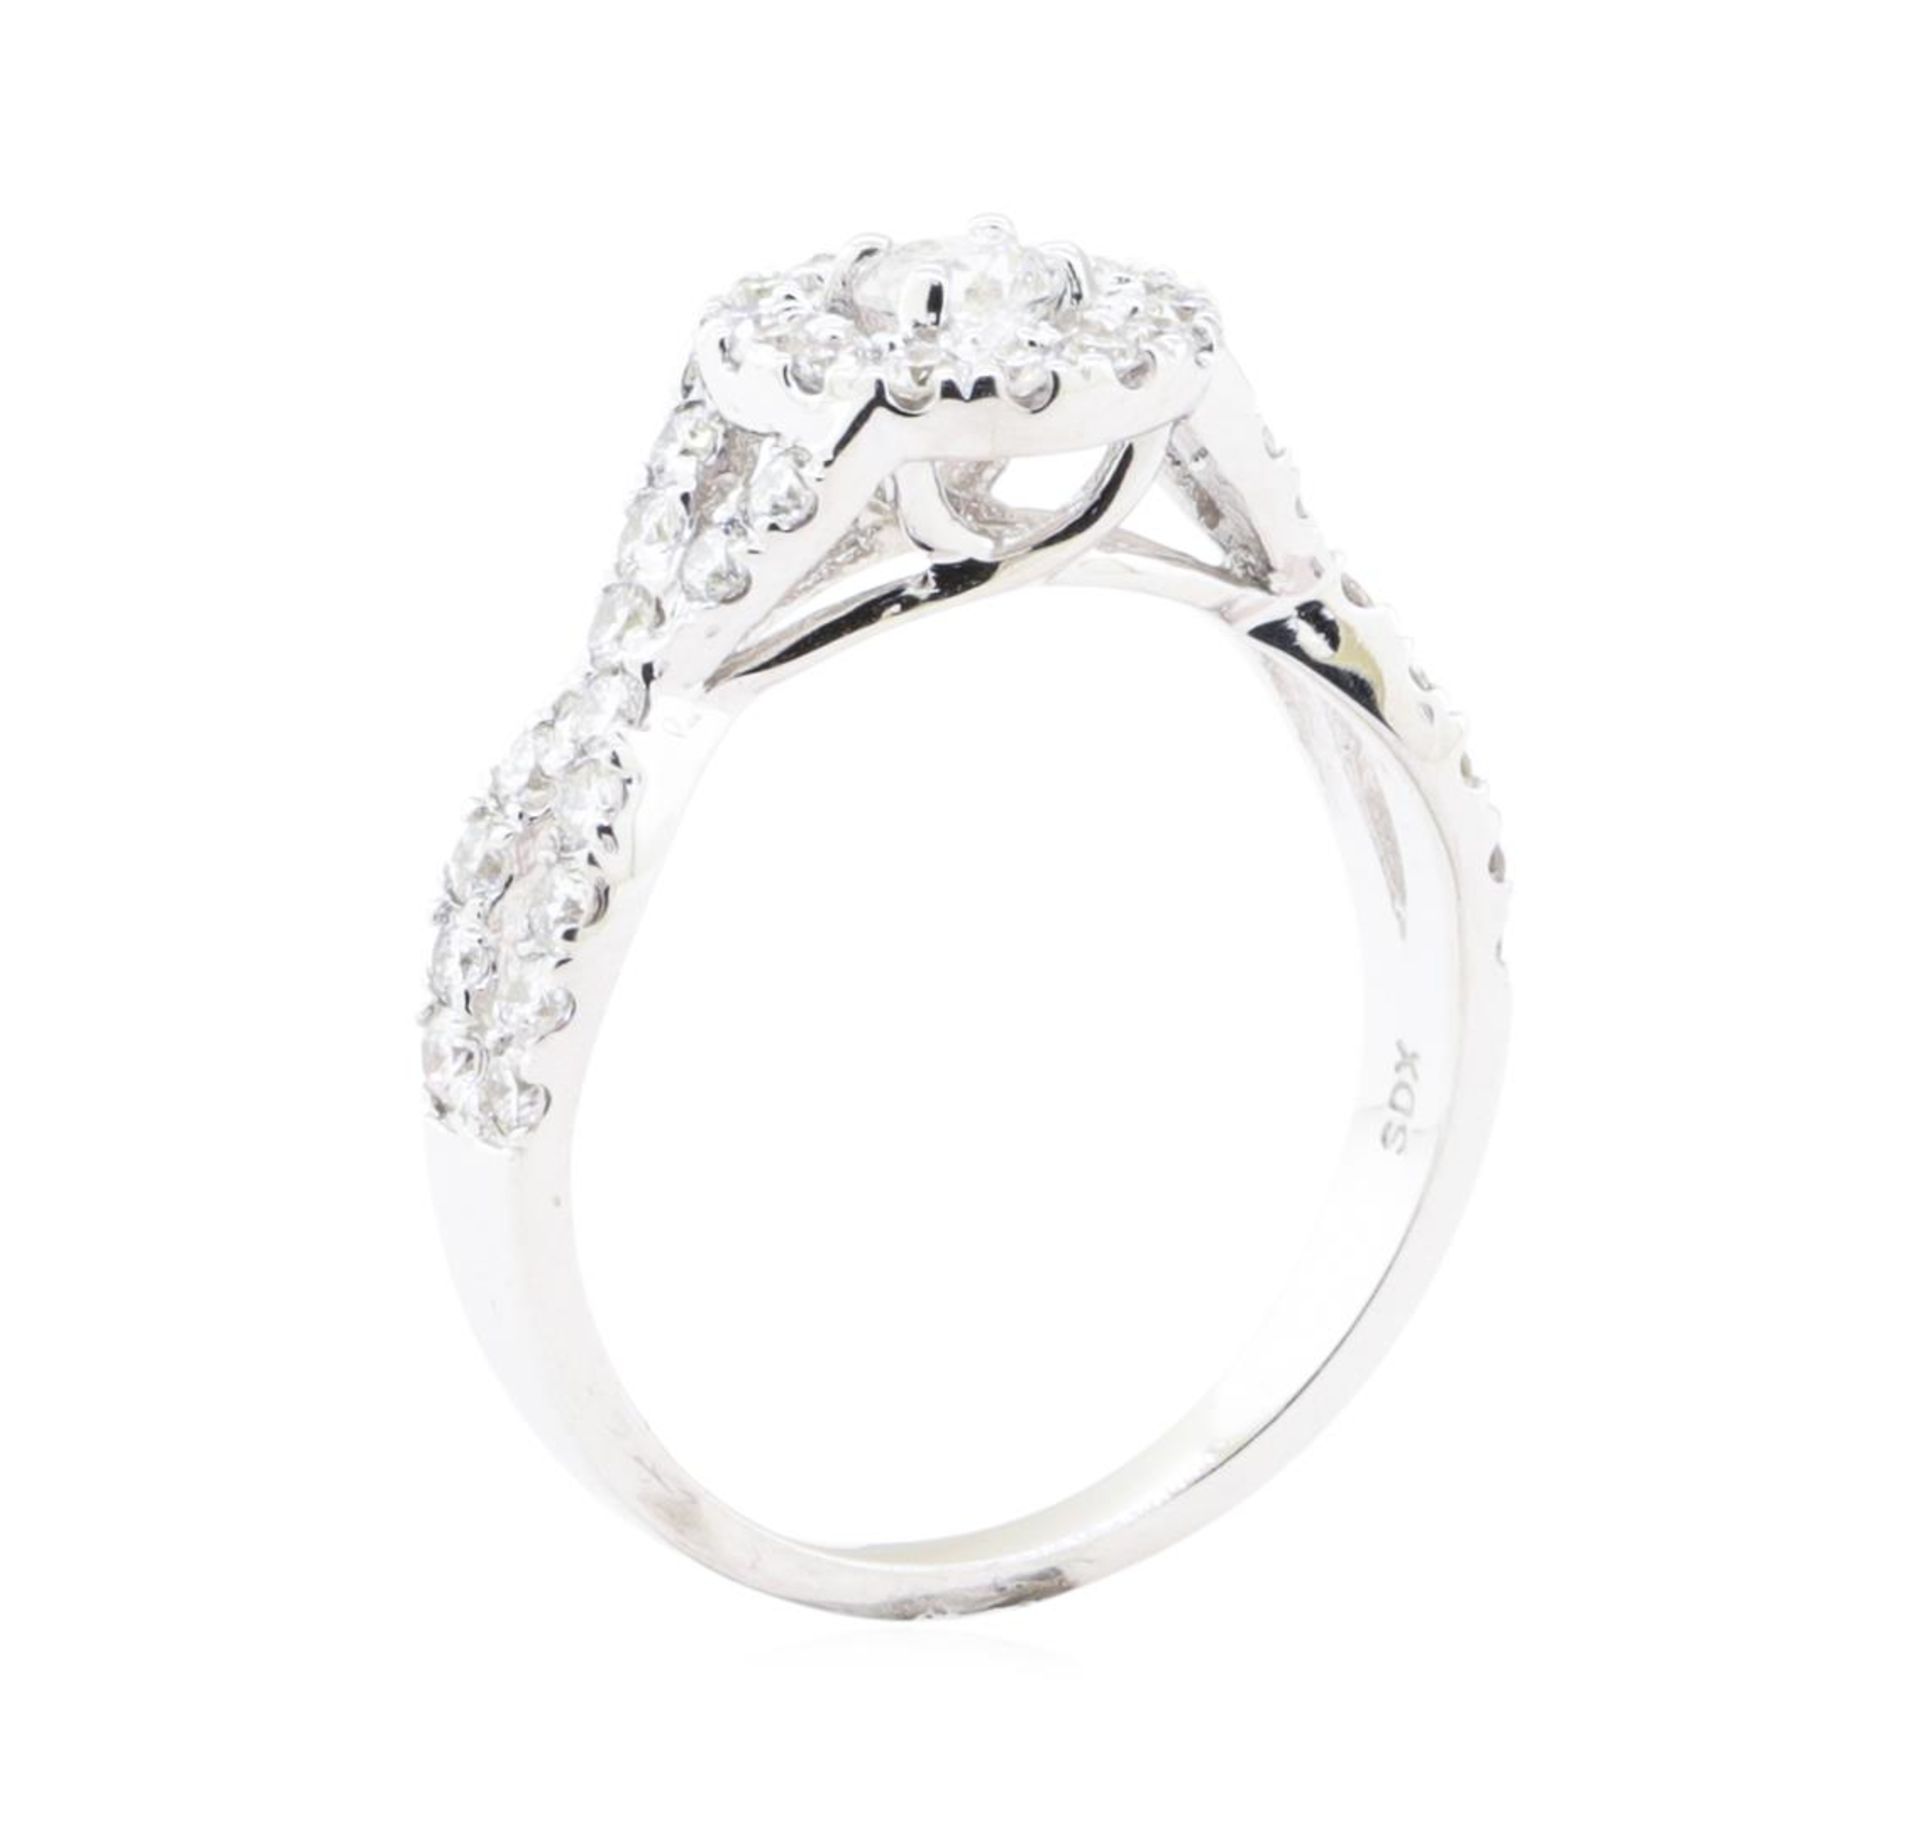 1.00 ctw Diamond Ring - 14KT White Gold - Image 4 of 5